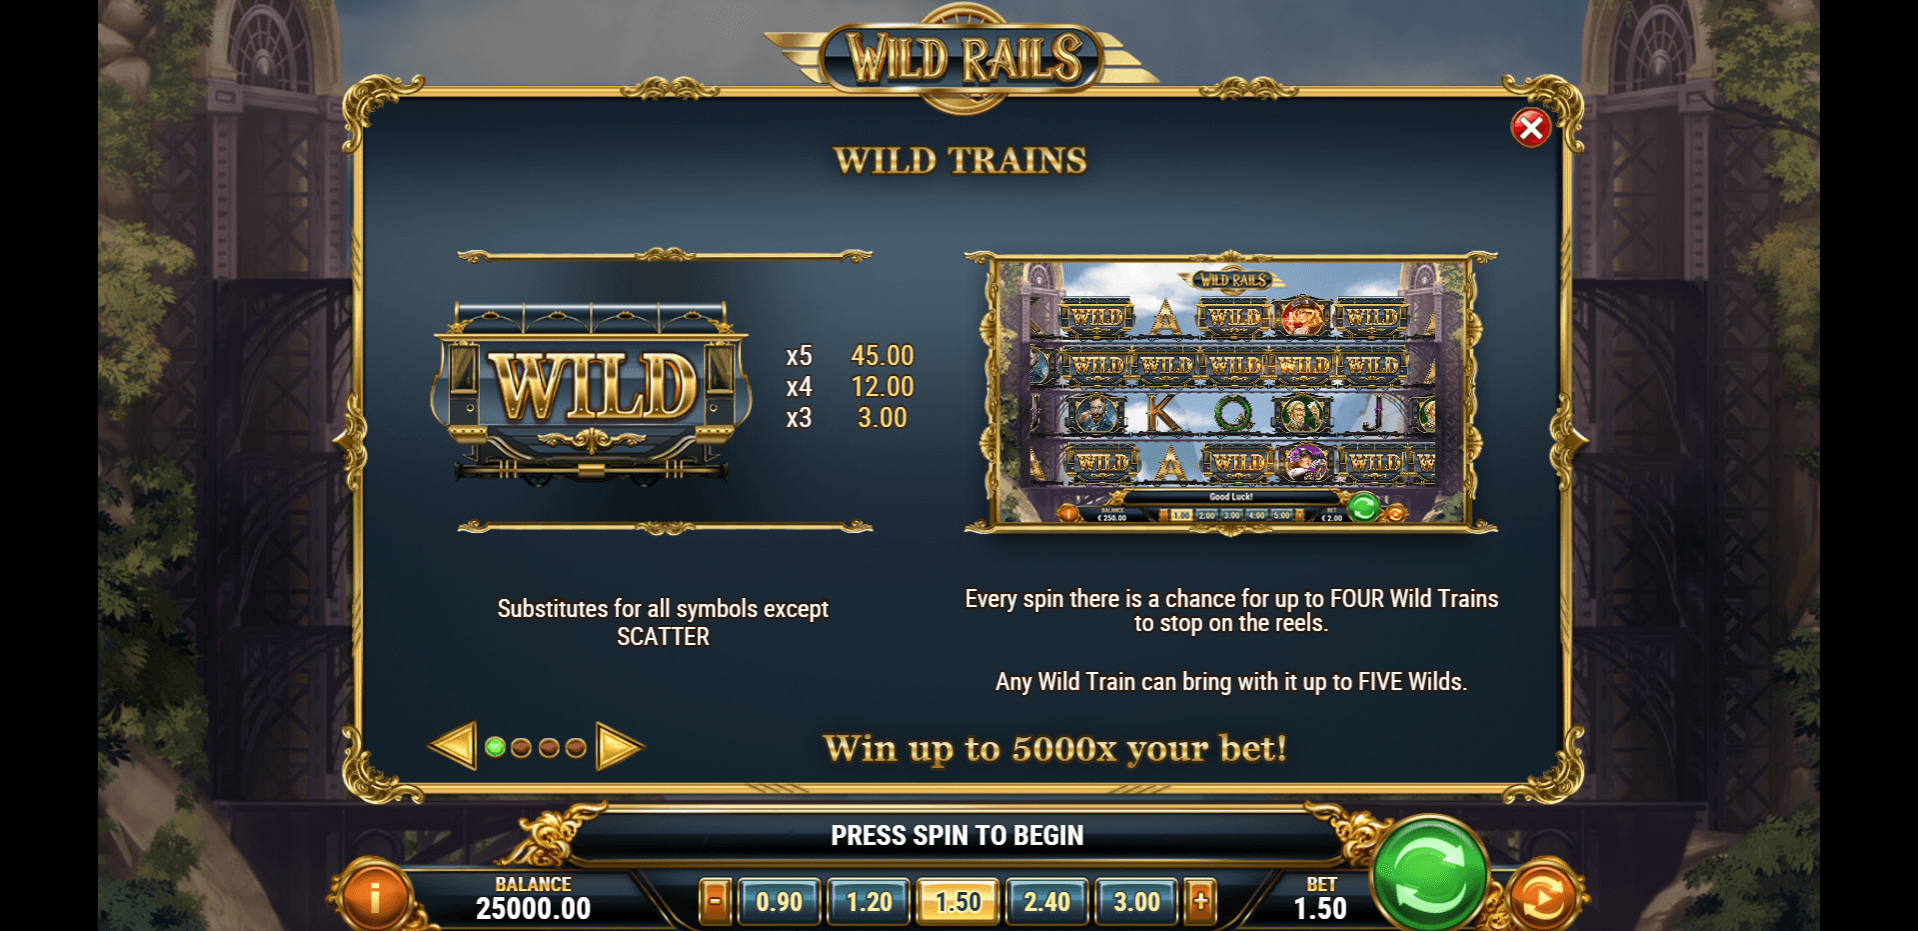 wild rails slot machine detail image 0